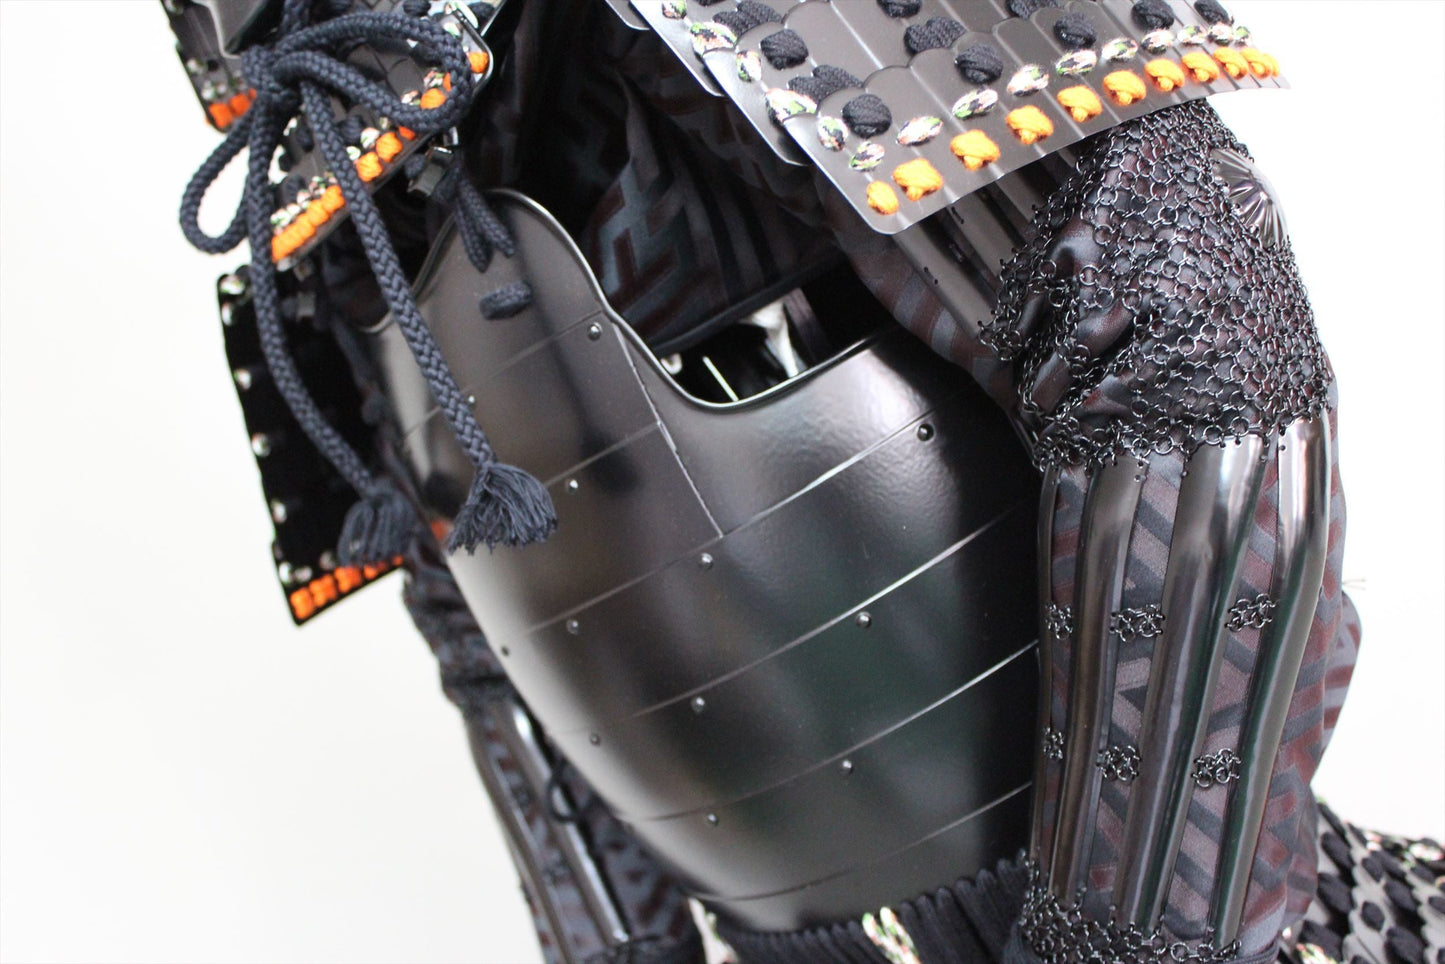 【O-049】Black Thread Odoshi / Black Matted Rivet Armor / Ikaboshi Helmet